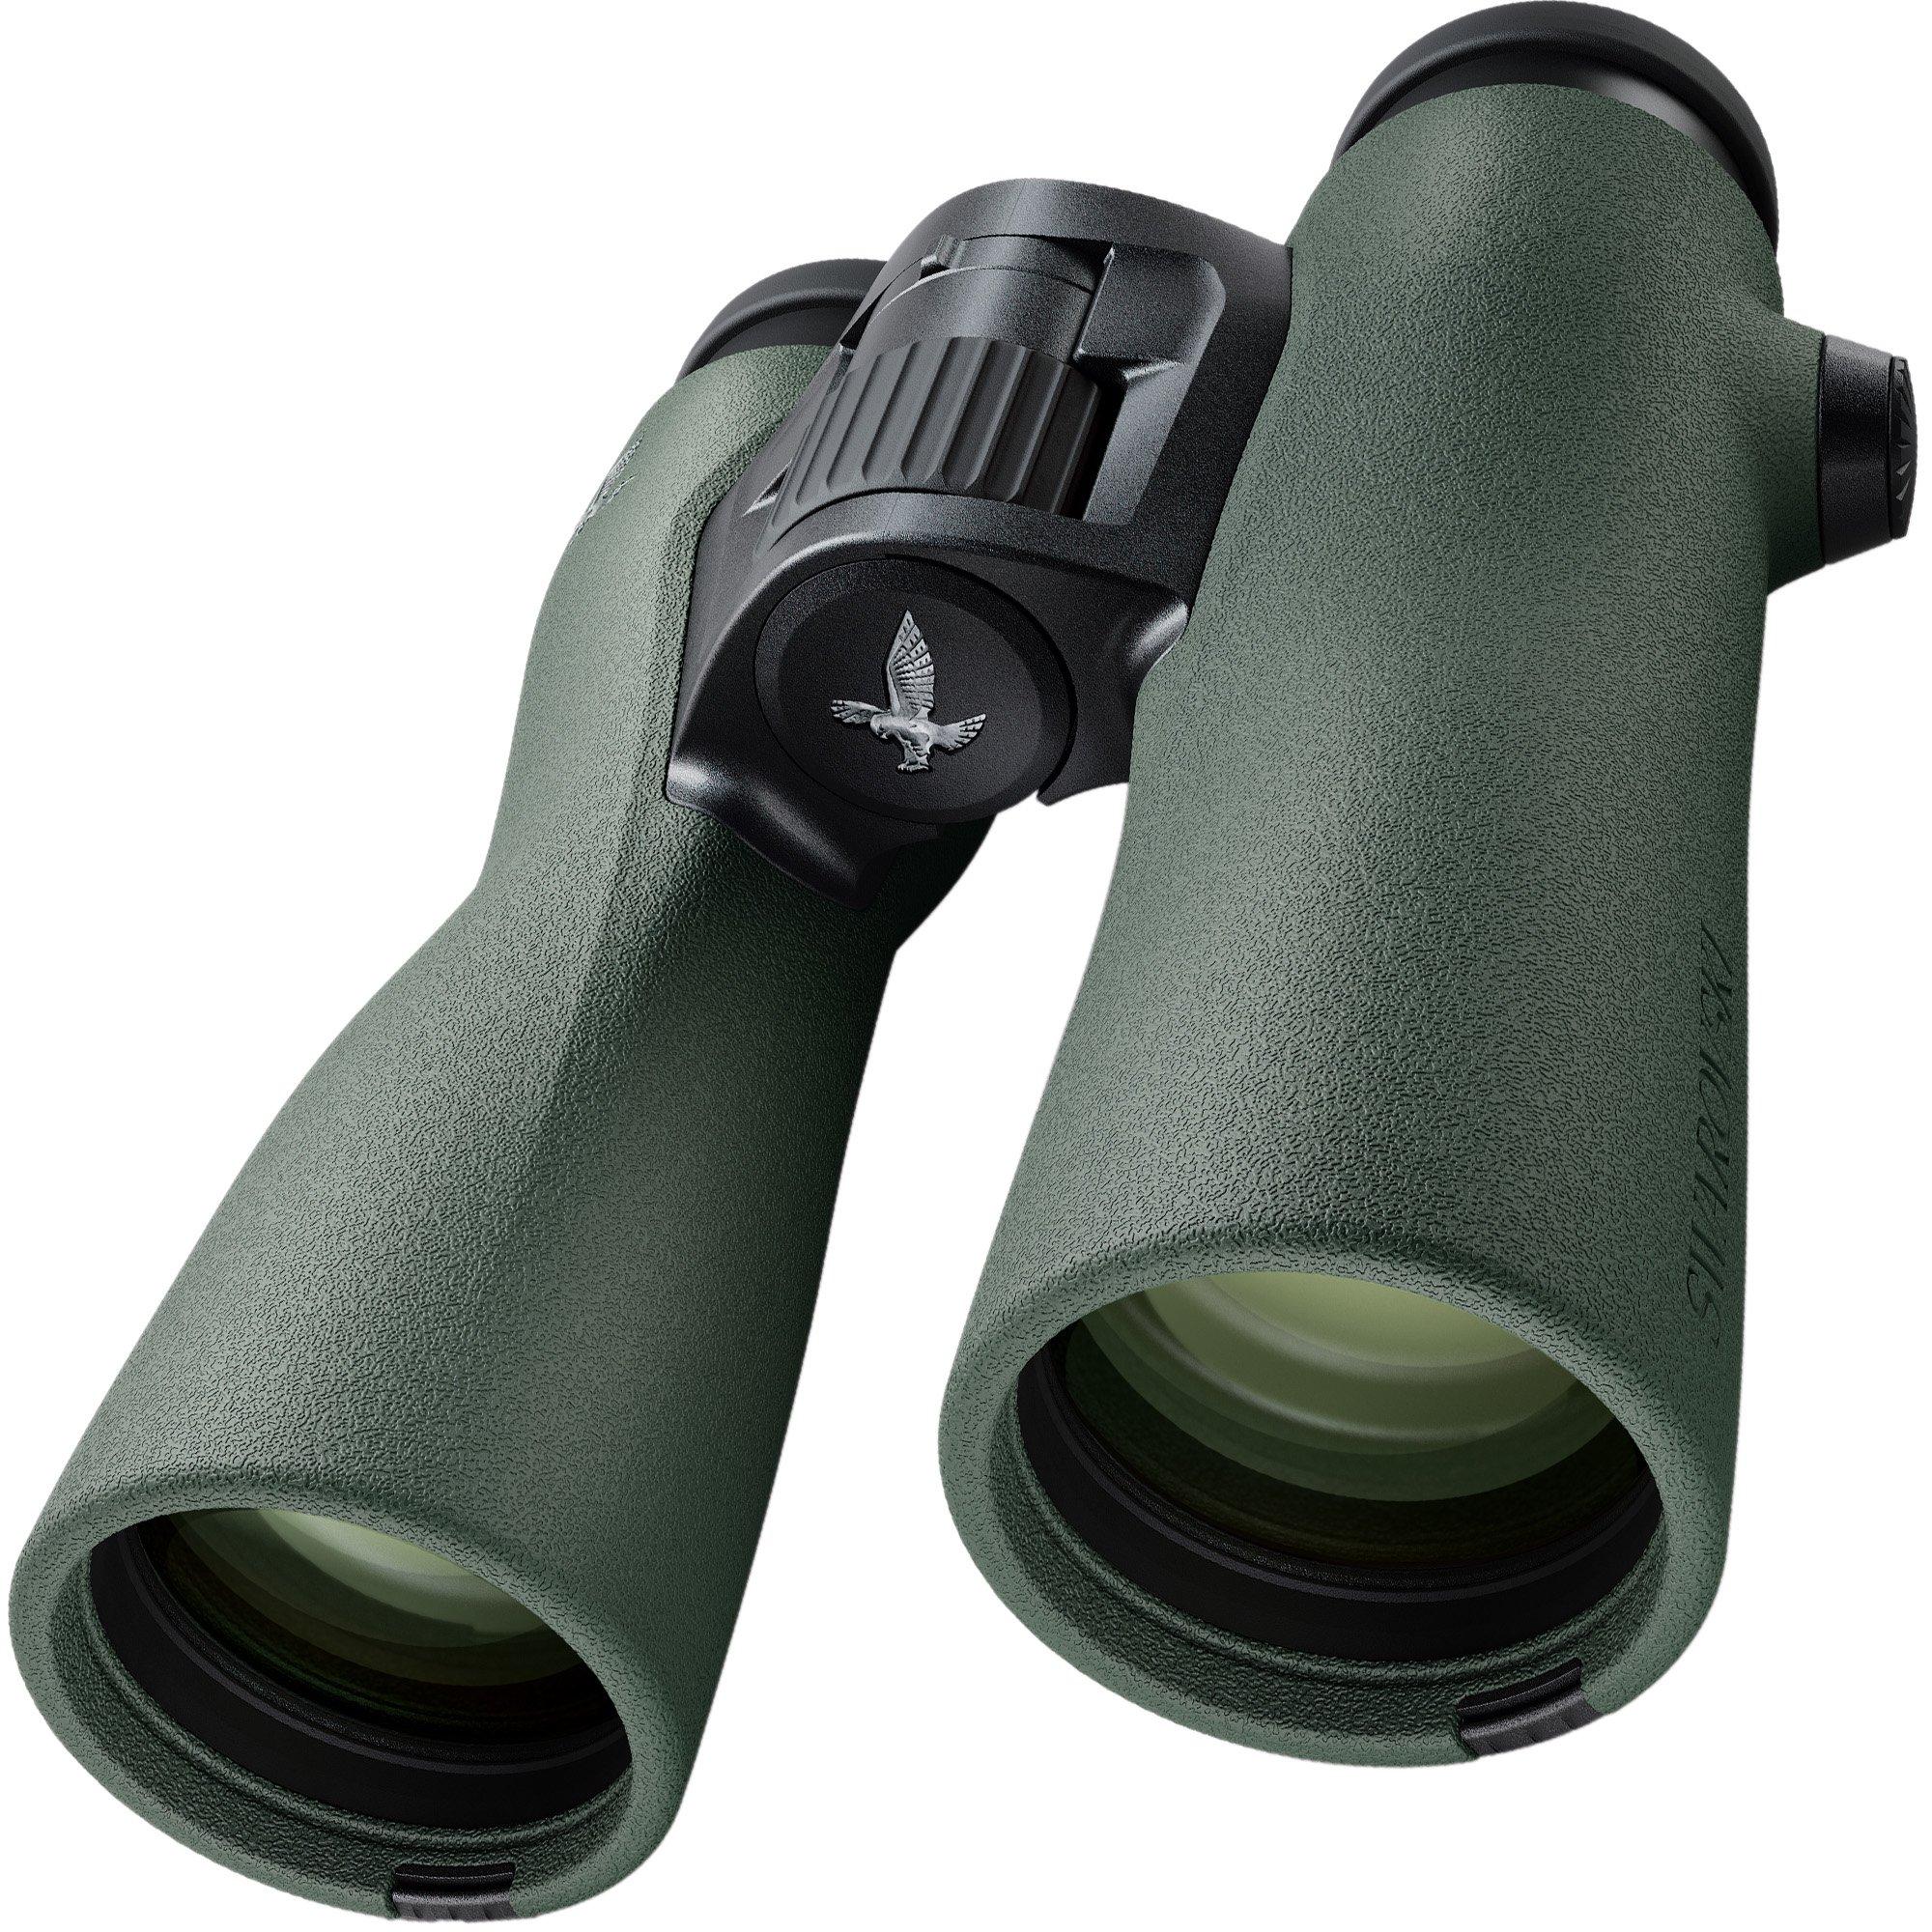 Swarovski binoculars | All binoculars tested and in stock